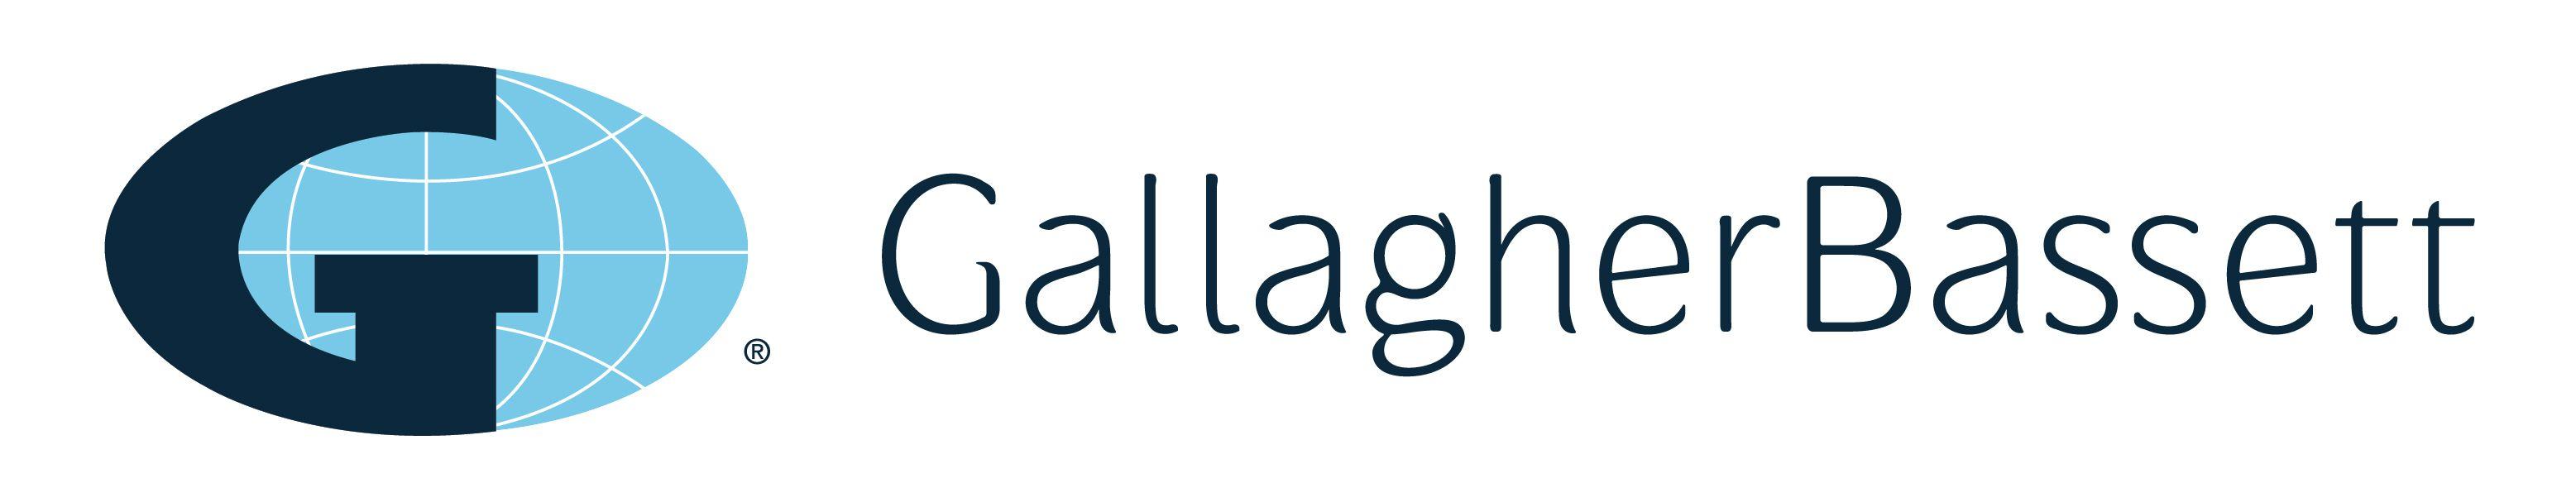 Gallagher Bassett Logo - Victorian Workers' Compensation - Gallagher Bassett